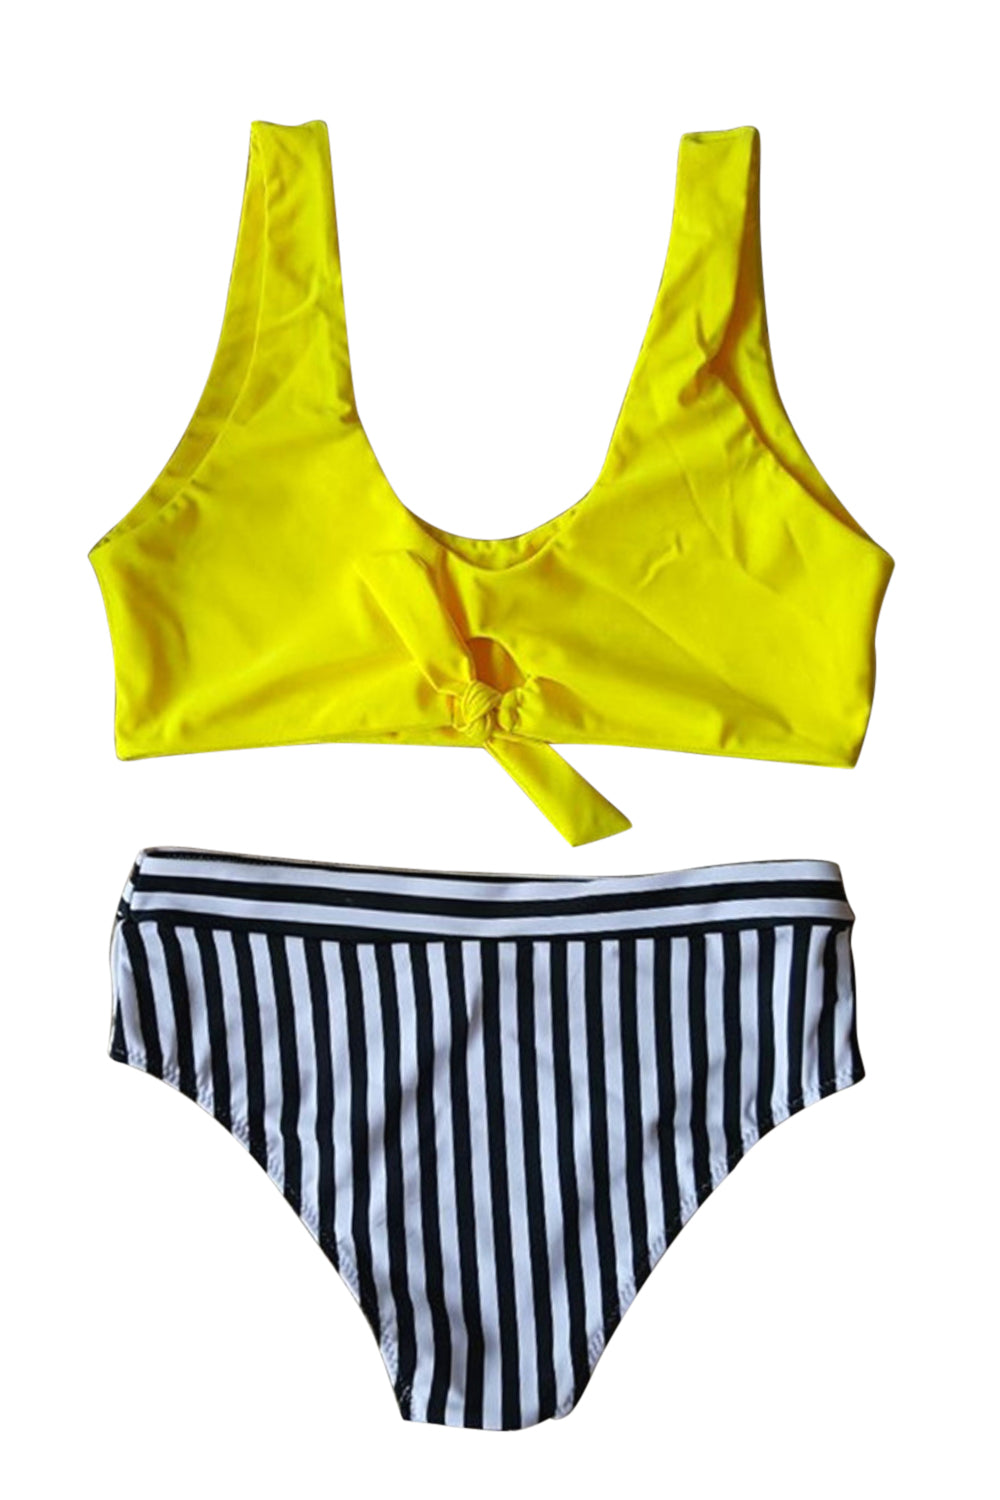 Iyasson Breezy Yellow Bikini Top With Stripe Printing Bottom